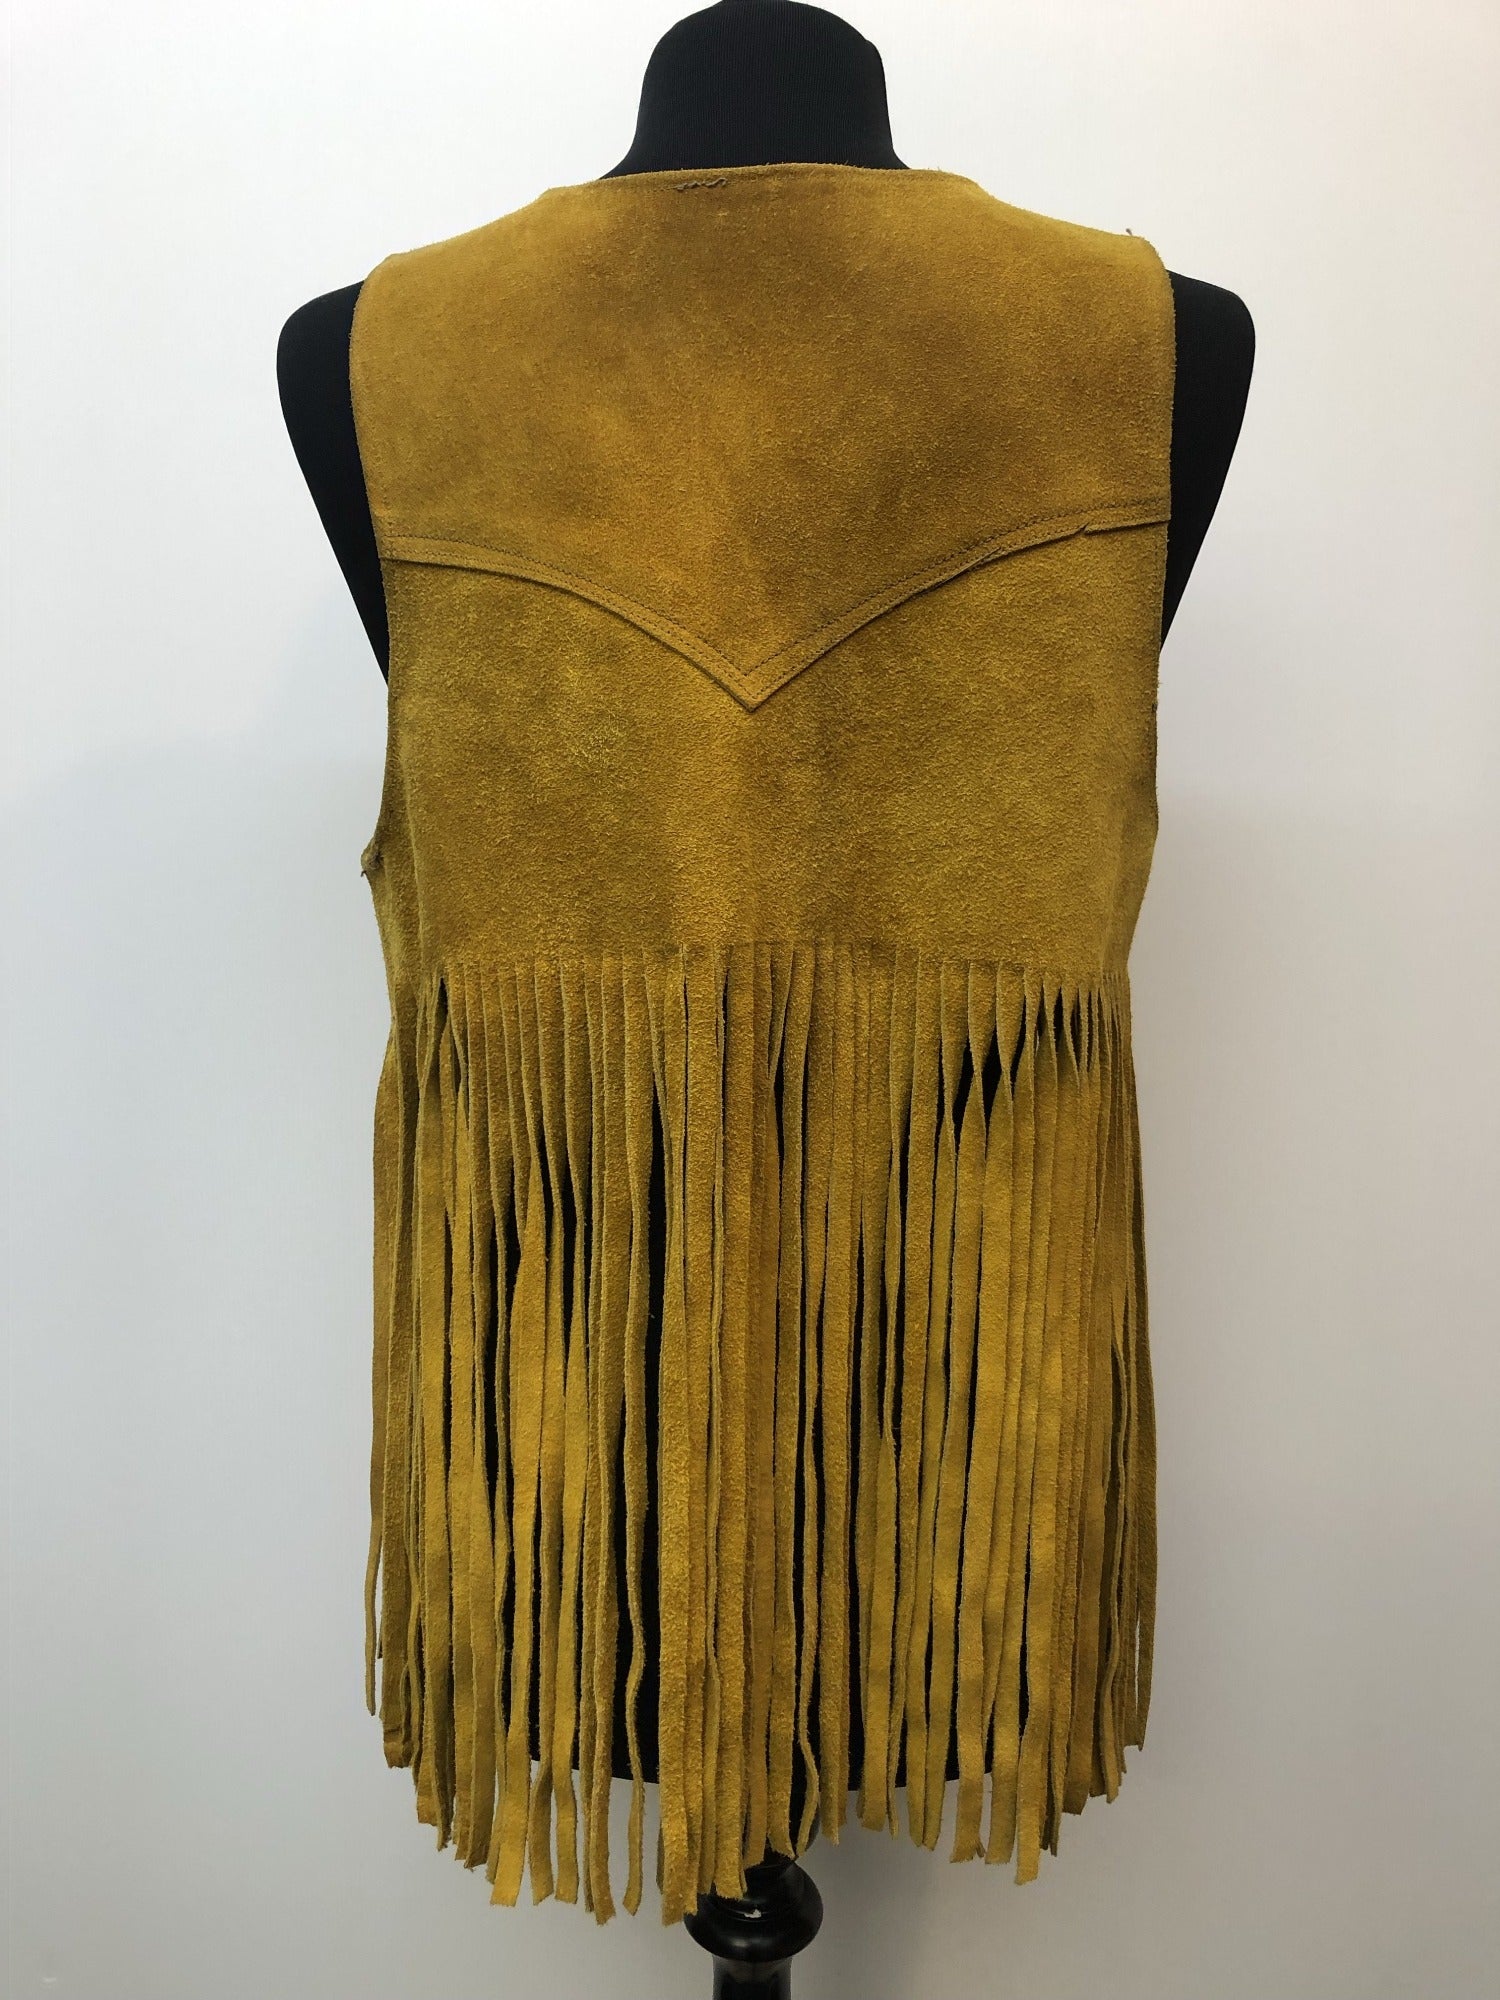 womens  western  waistcoat  vintage  vest  tassel  tan  Suede  navajo  Jacket  hippie  fringed  boho  70s  1970s